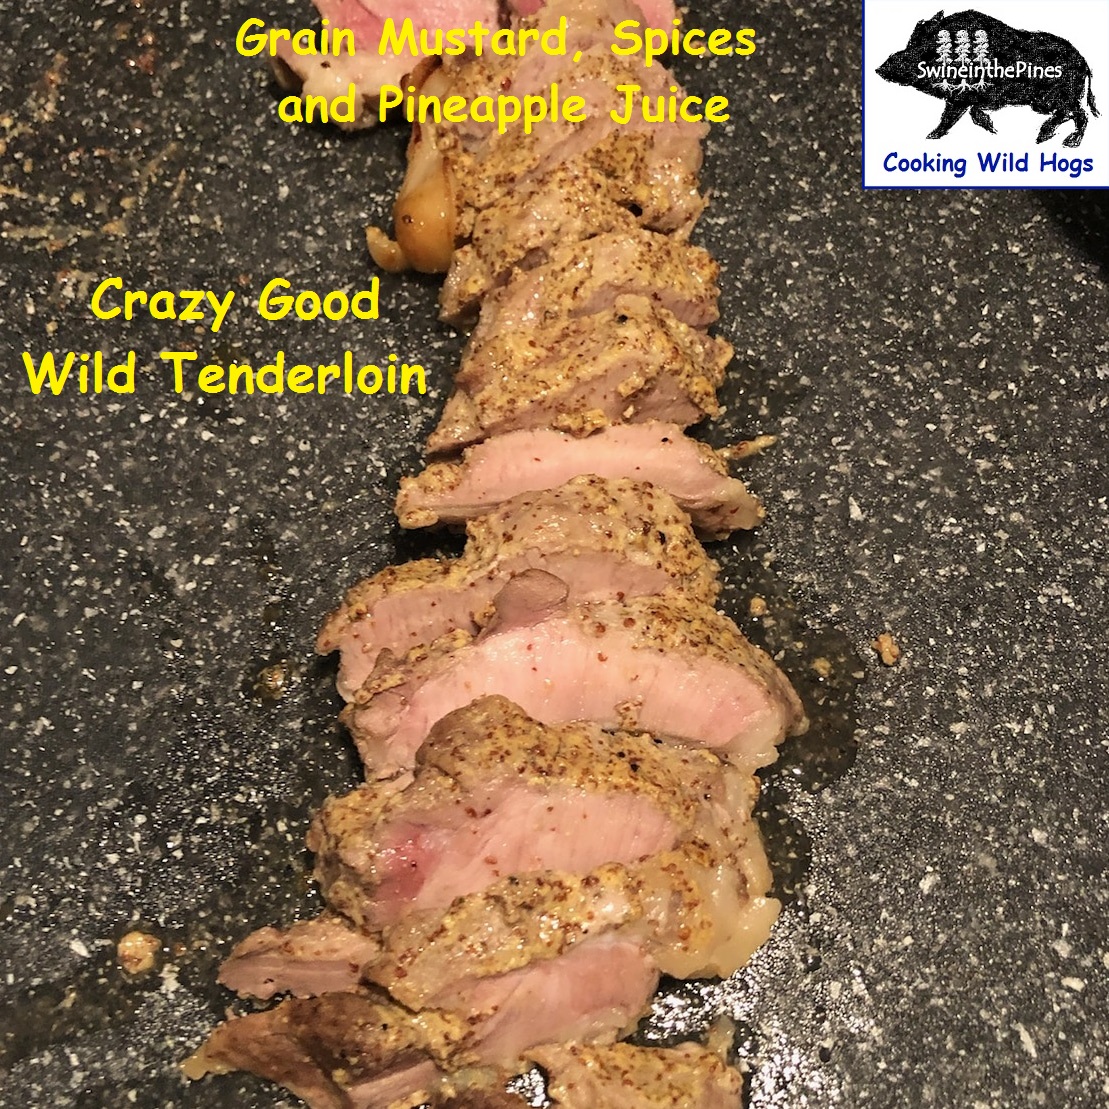 Crazy Good Wild Tenderloin - Grain Mustard, Spices and Pineapple Juice